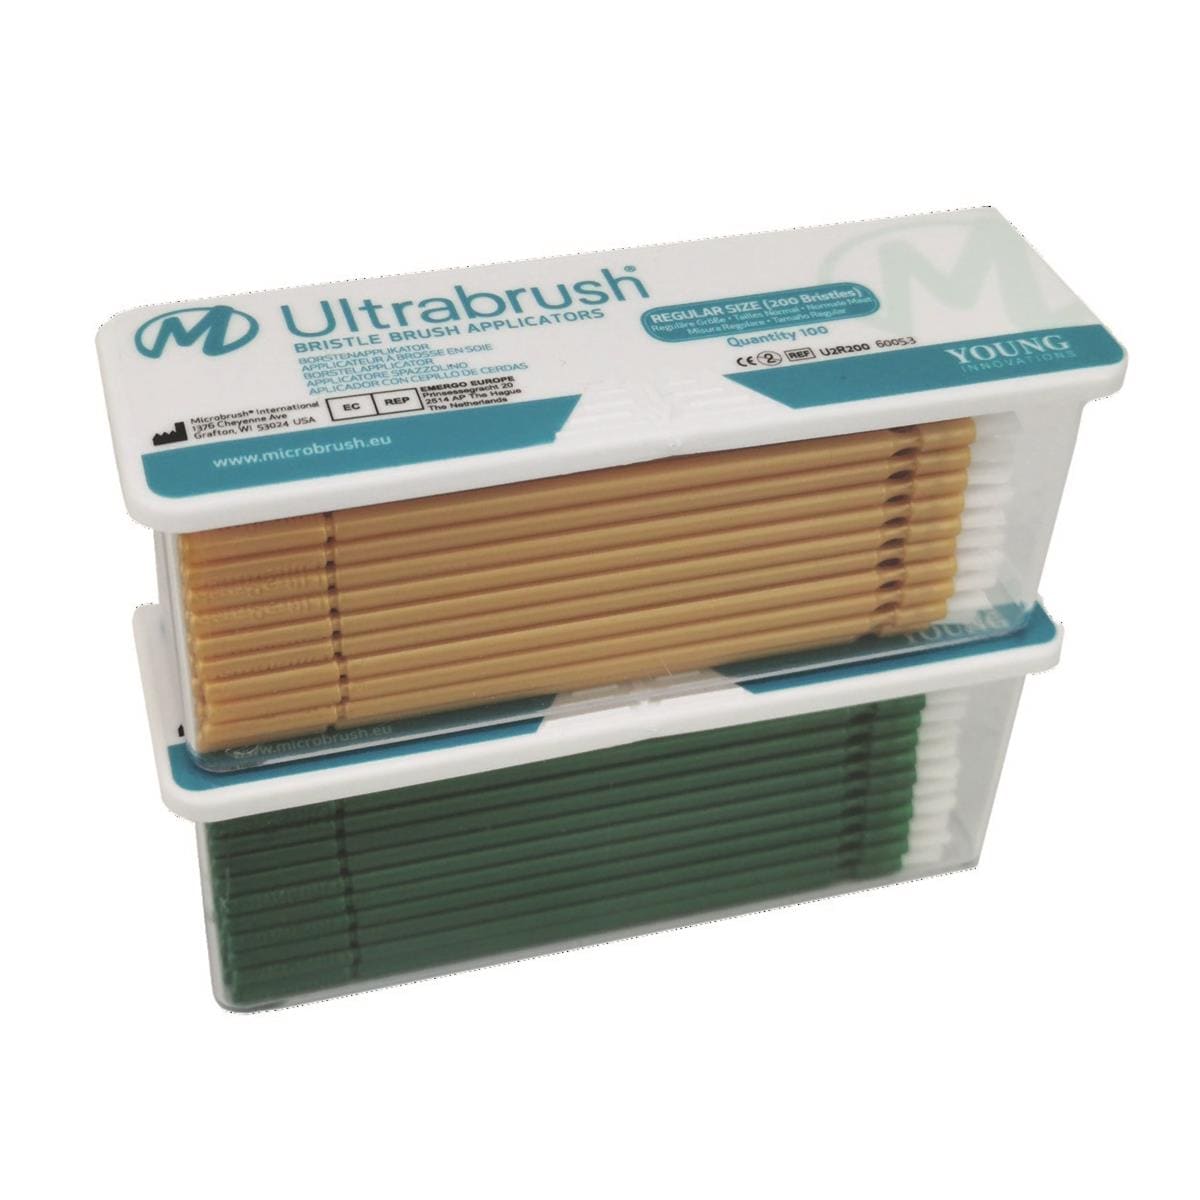 Ultrabrush Brossettes jaune-vert - recharge de 200 - Microbrush